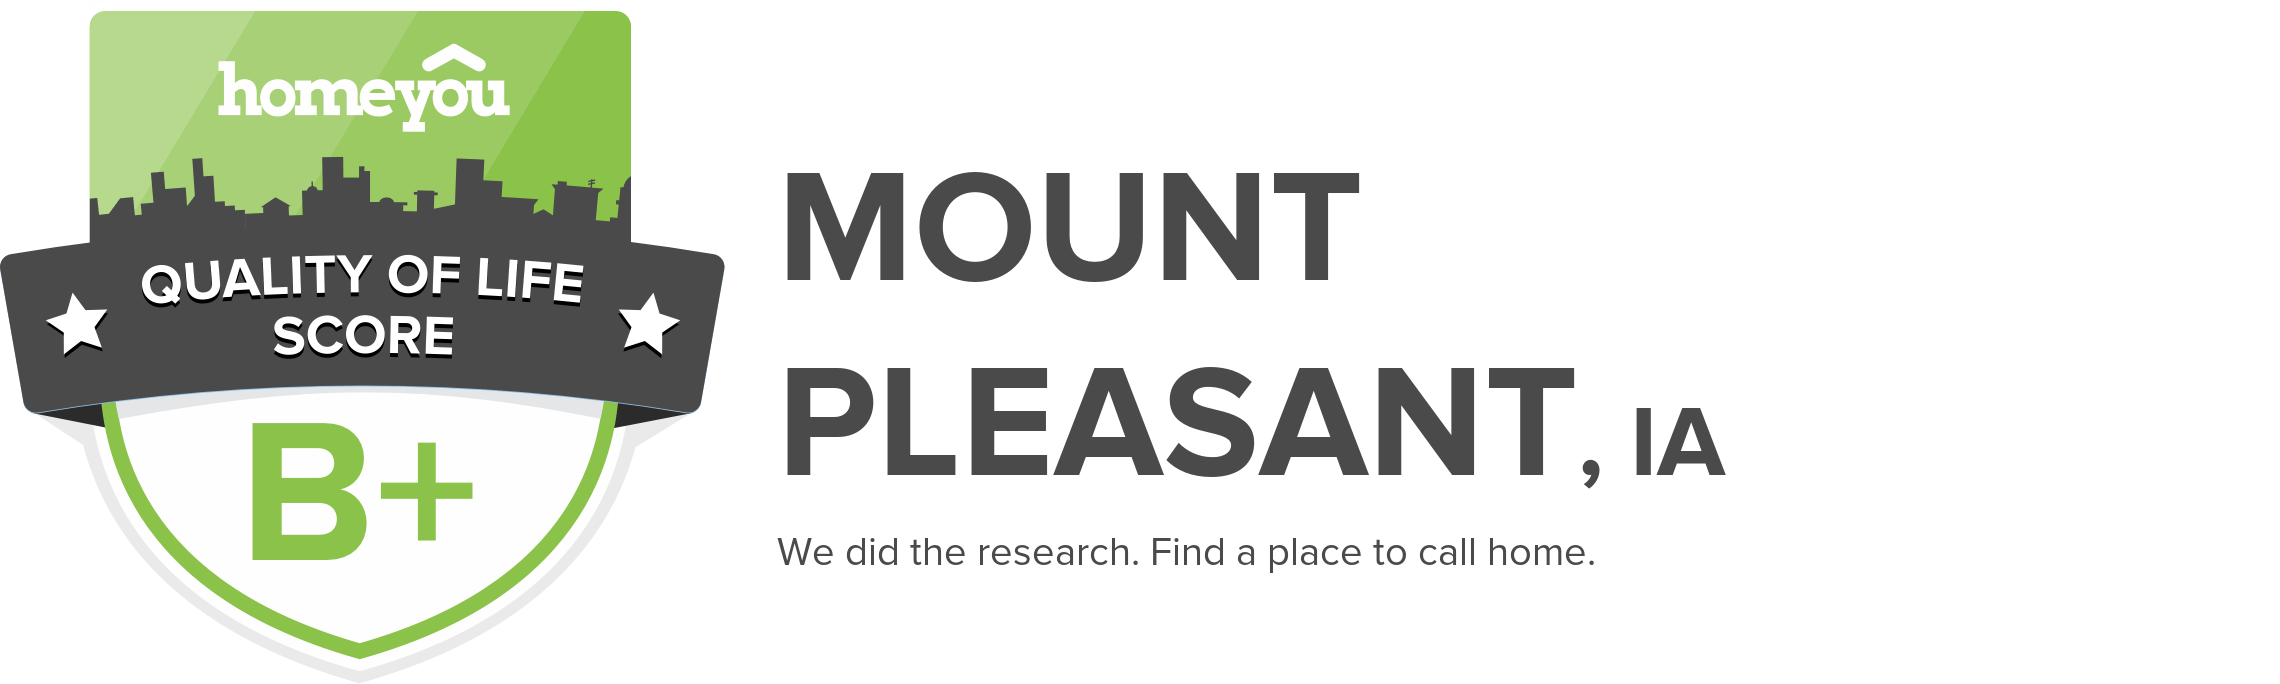 Mount Pleasant, IA